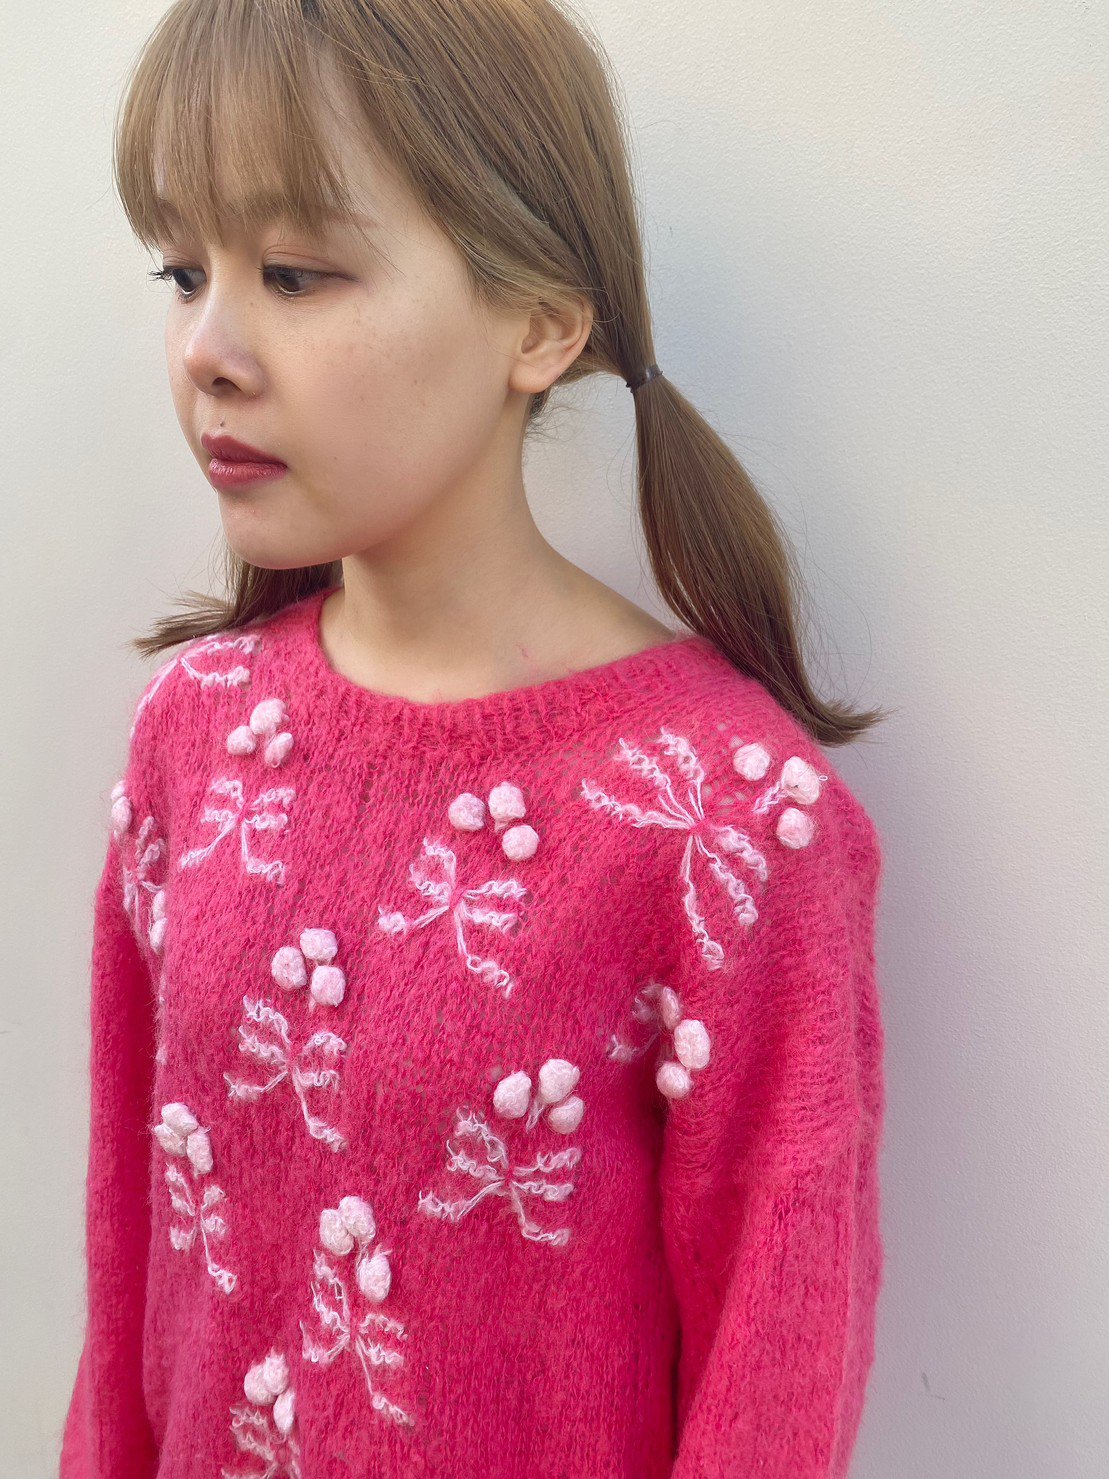 vivid pink flower knit tops